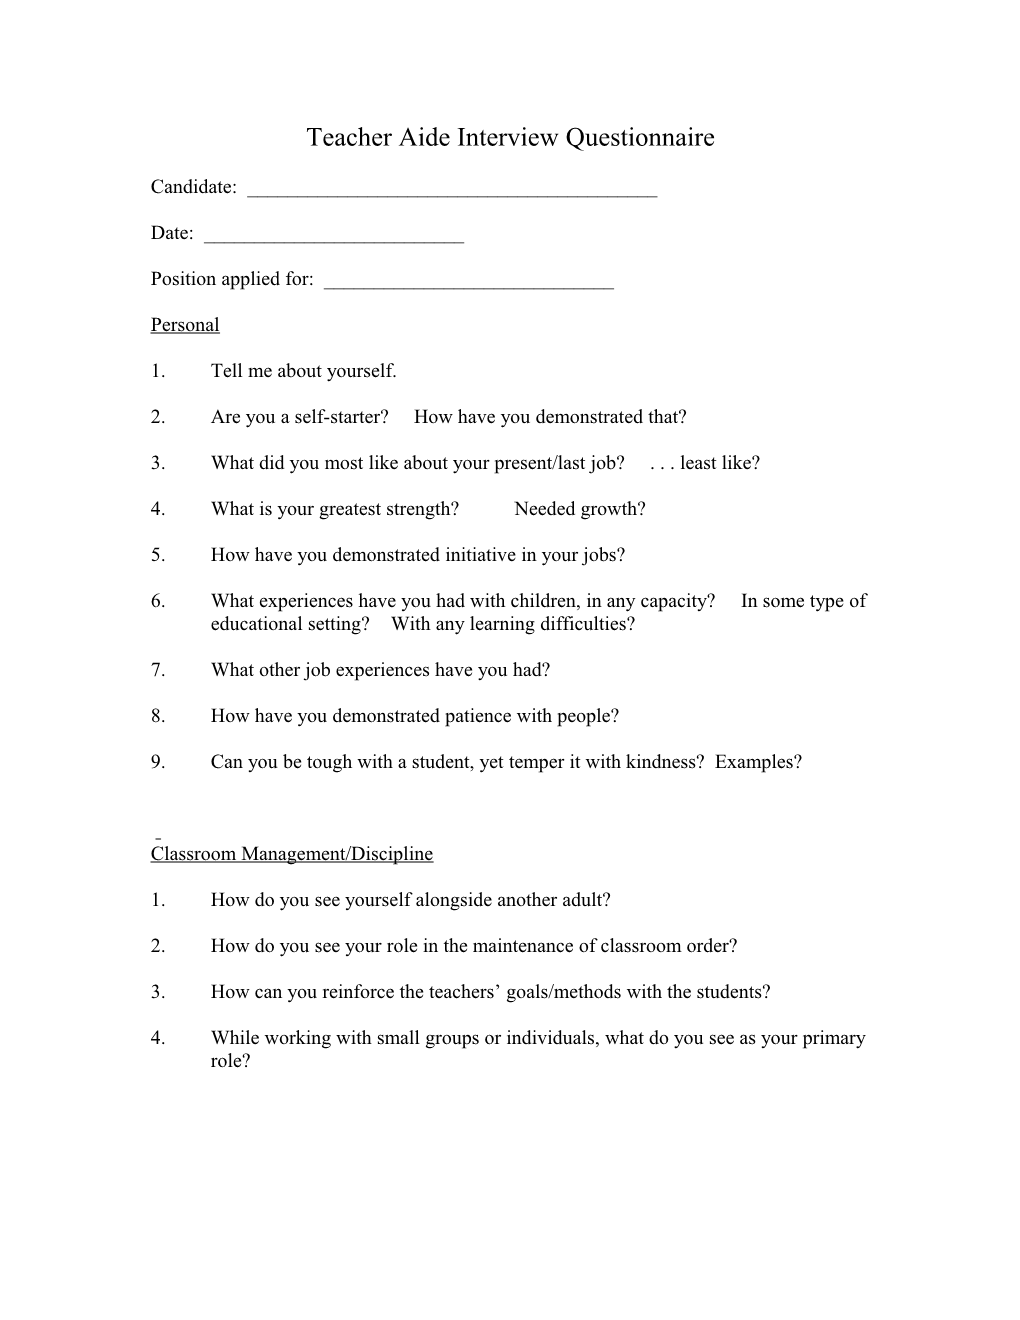 Teacher Aide Interview Questionnaire